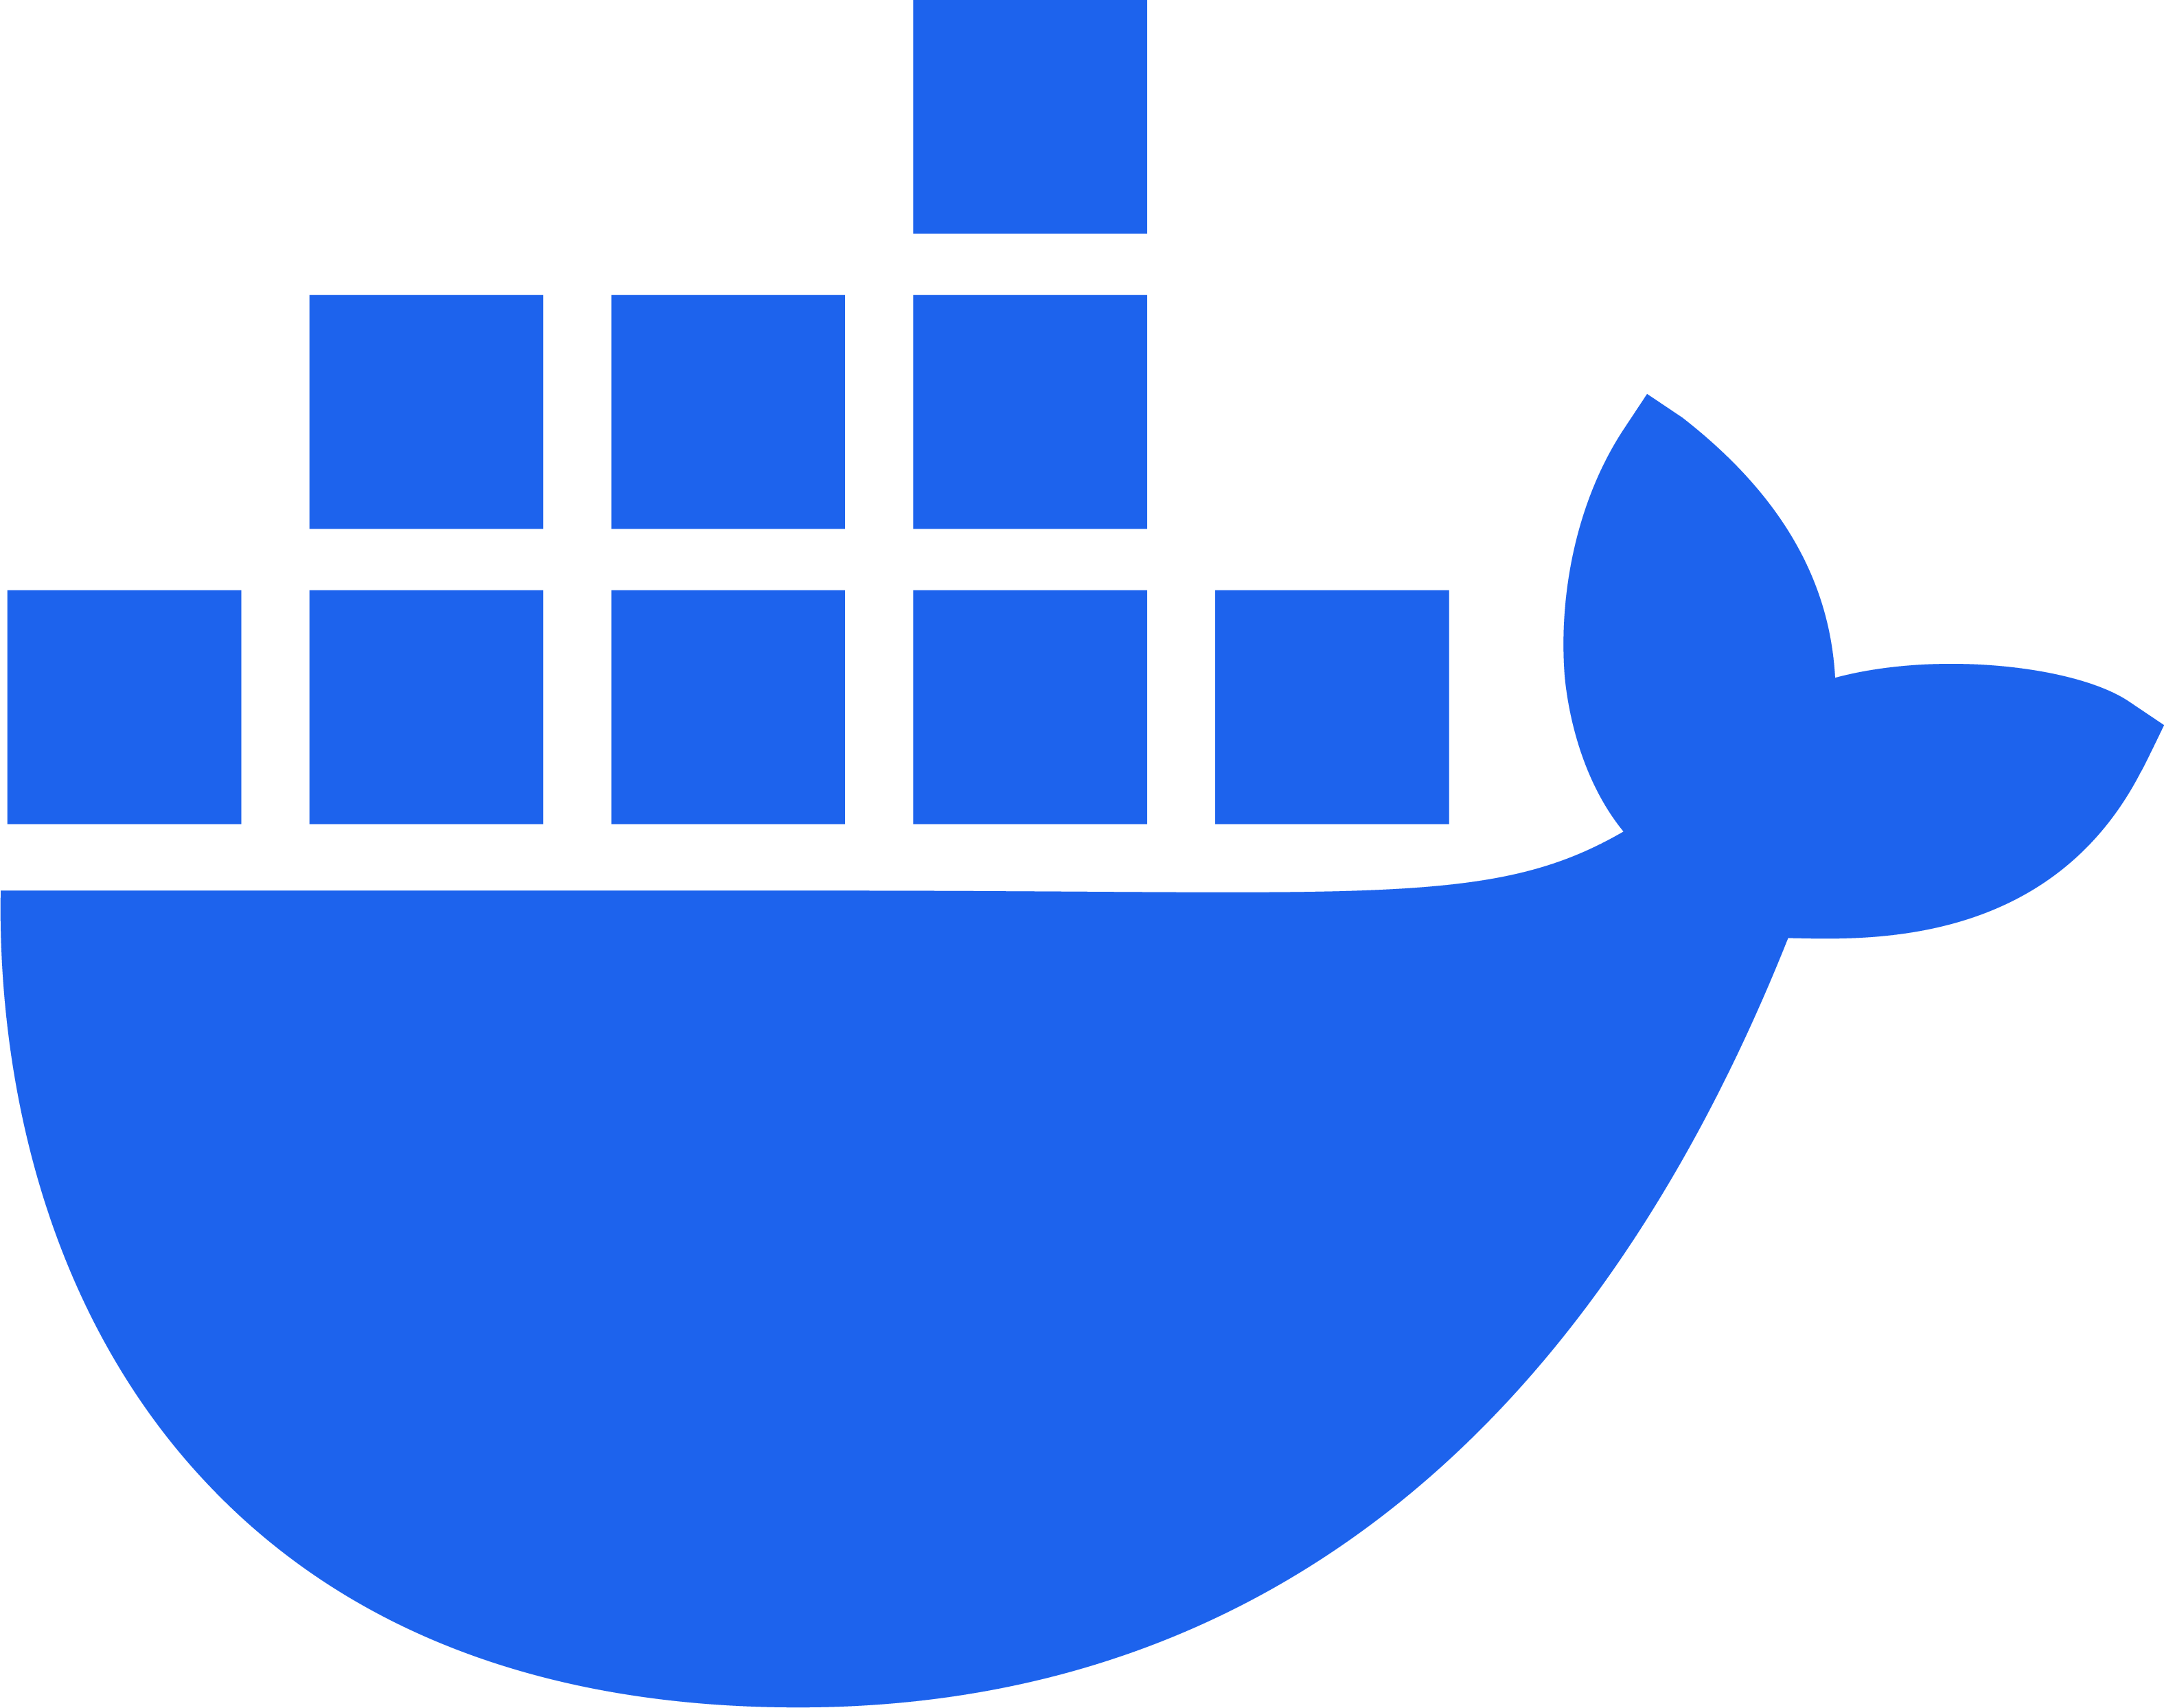 Docker Build Cloud